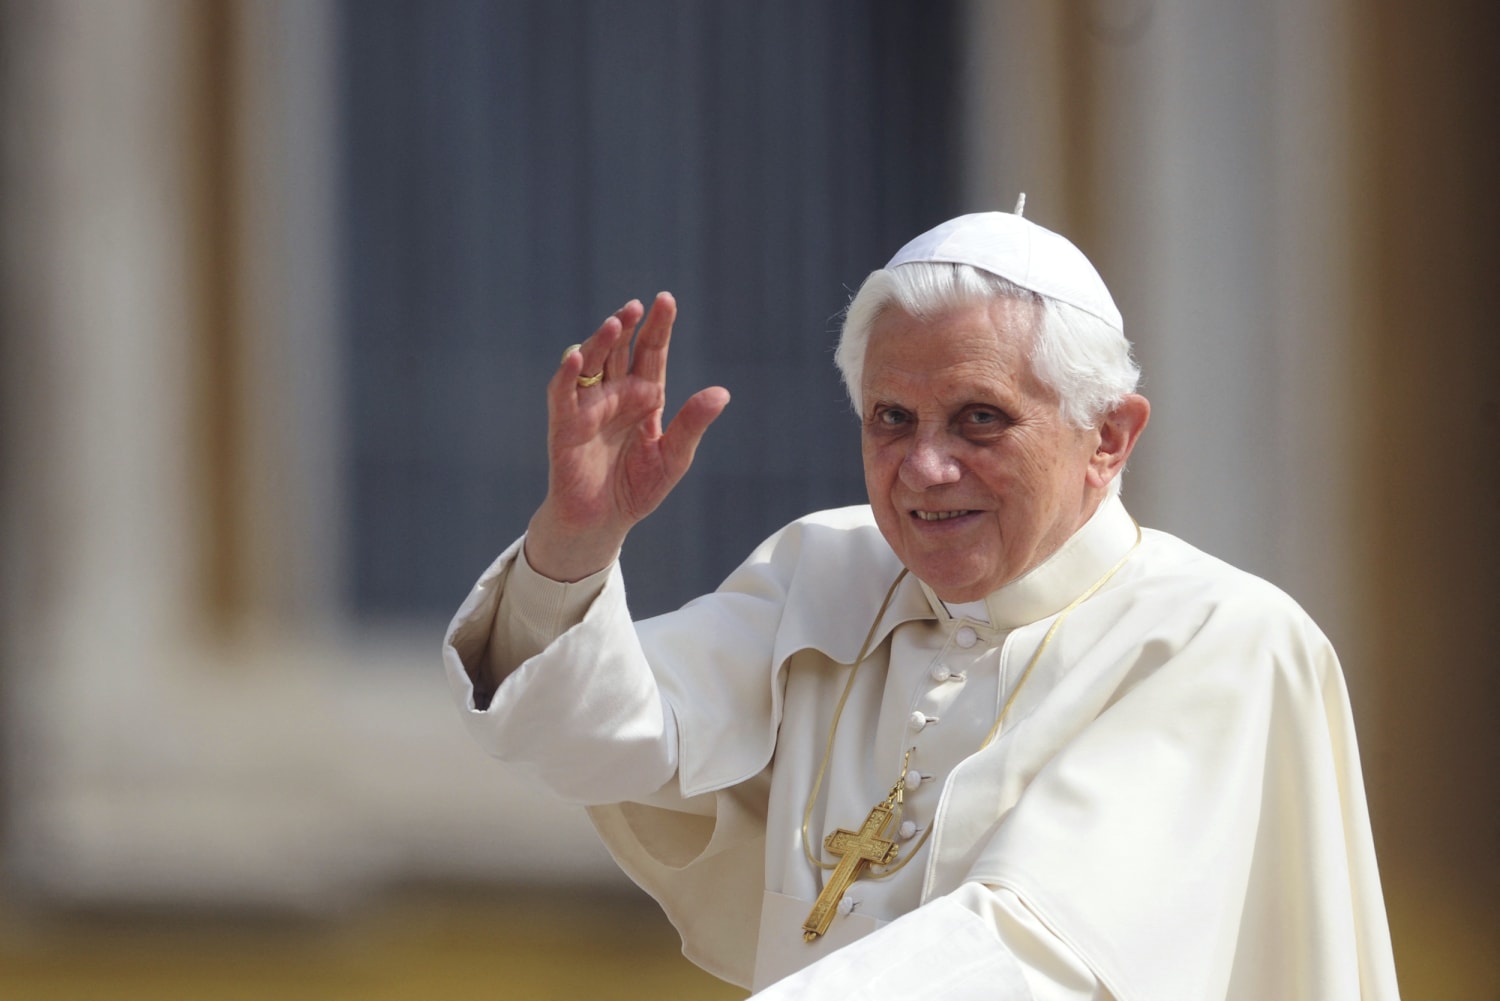 Fjendtlig Åbent umoral Ex pope Benedict 'very sick,' Pope Francis says